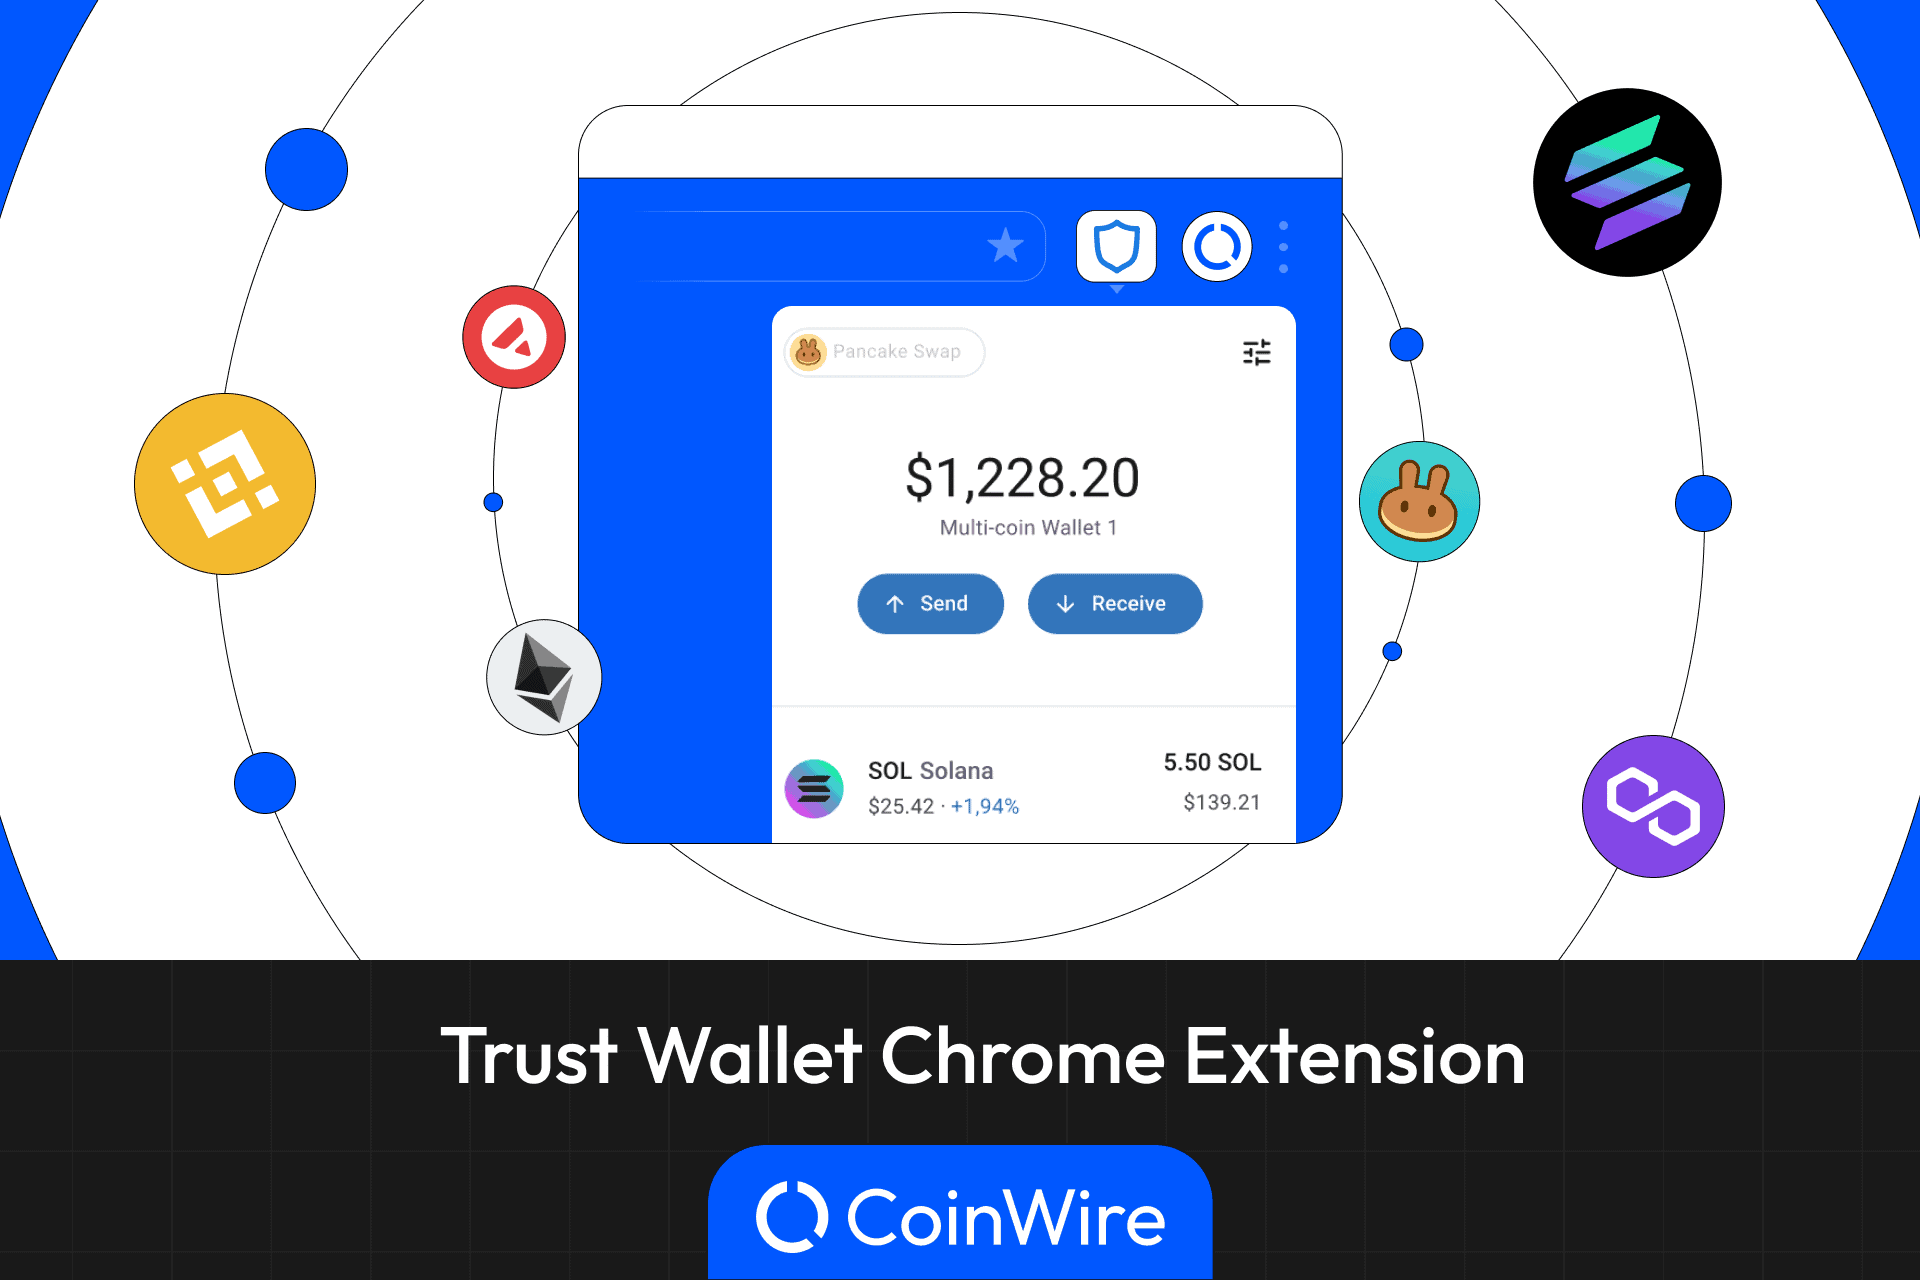 GitHub - frozeman/bitcoin-browser-wallet: A simple bitcoin browser wallet